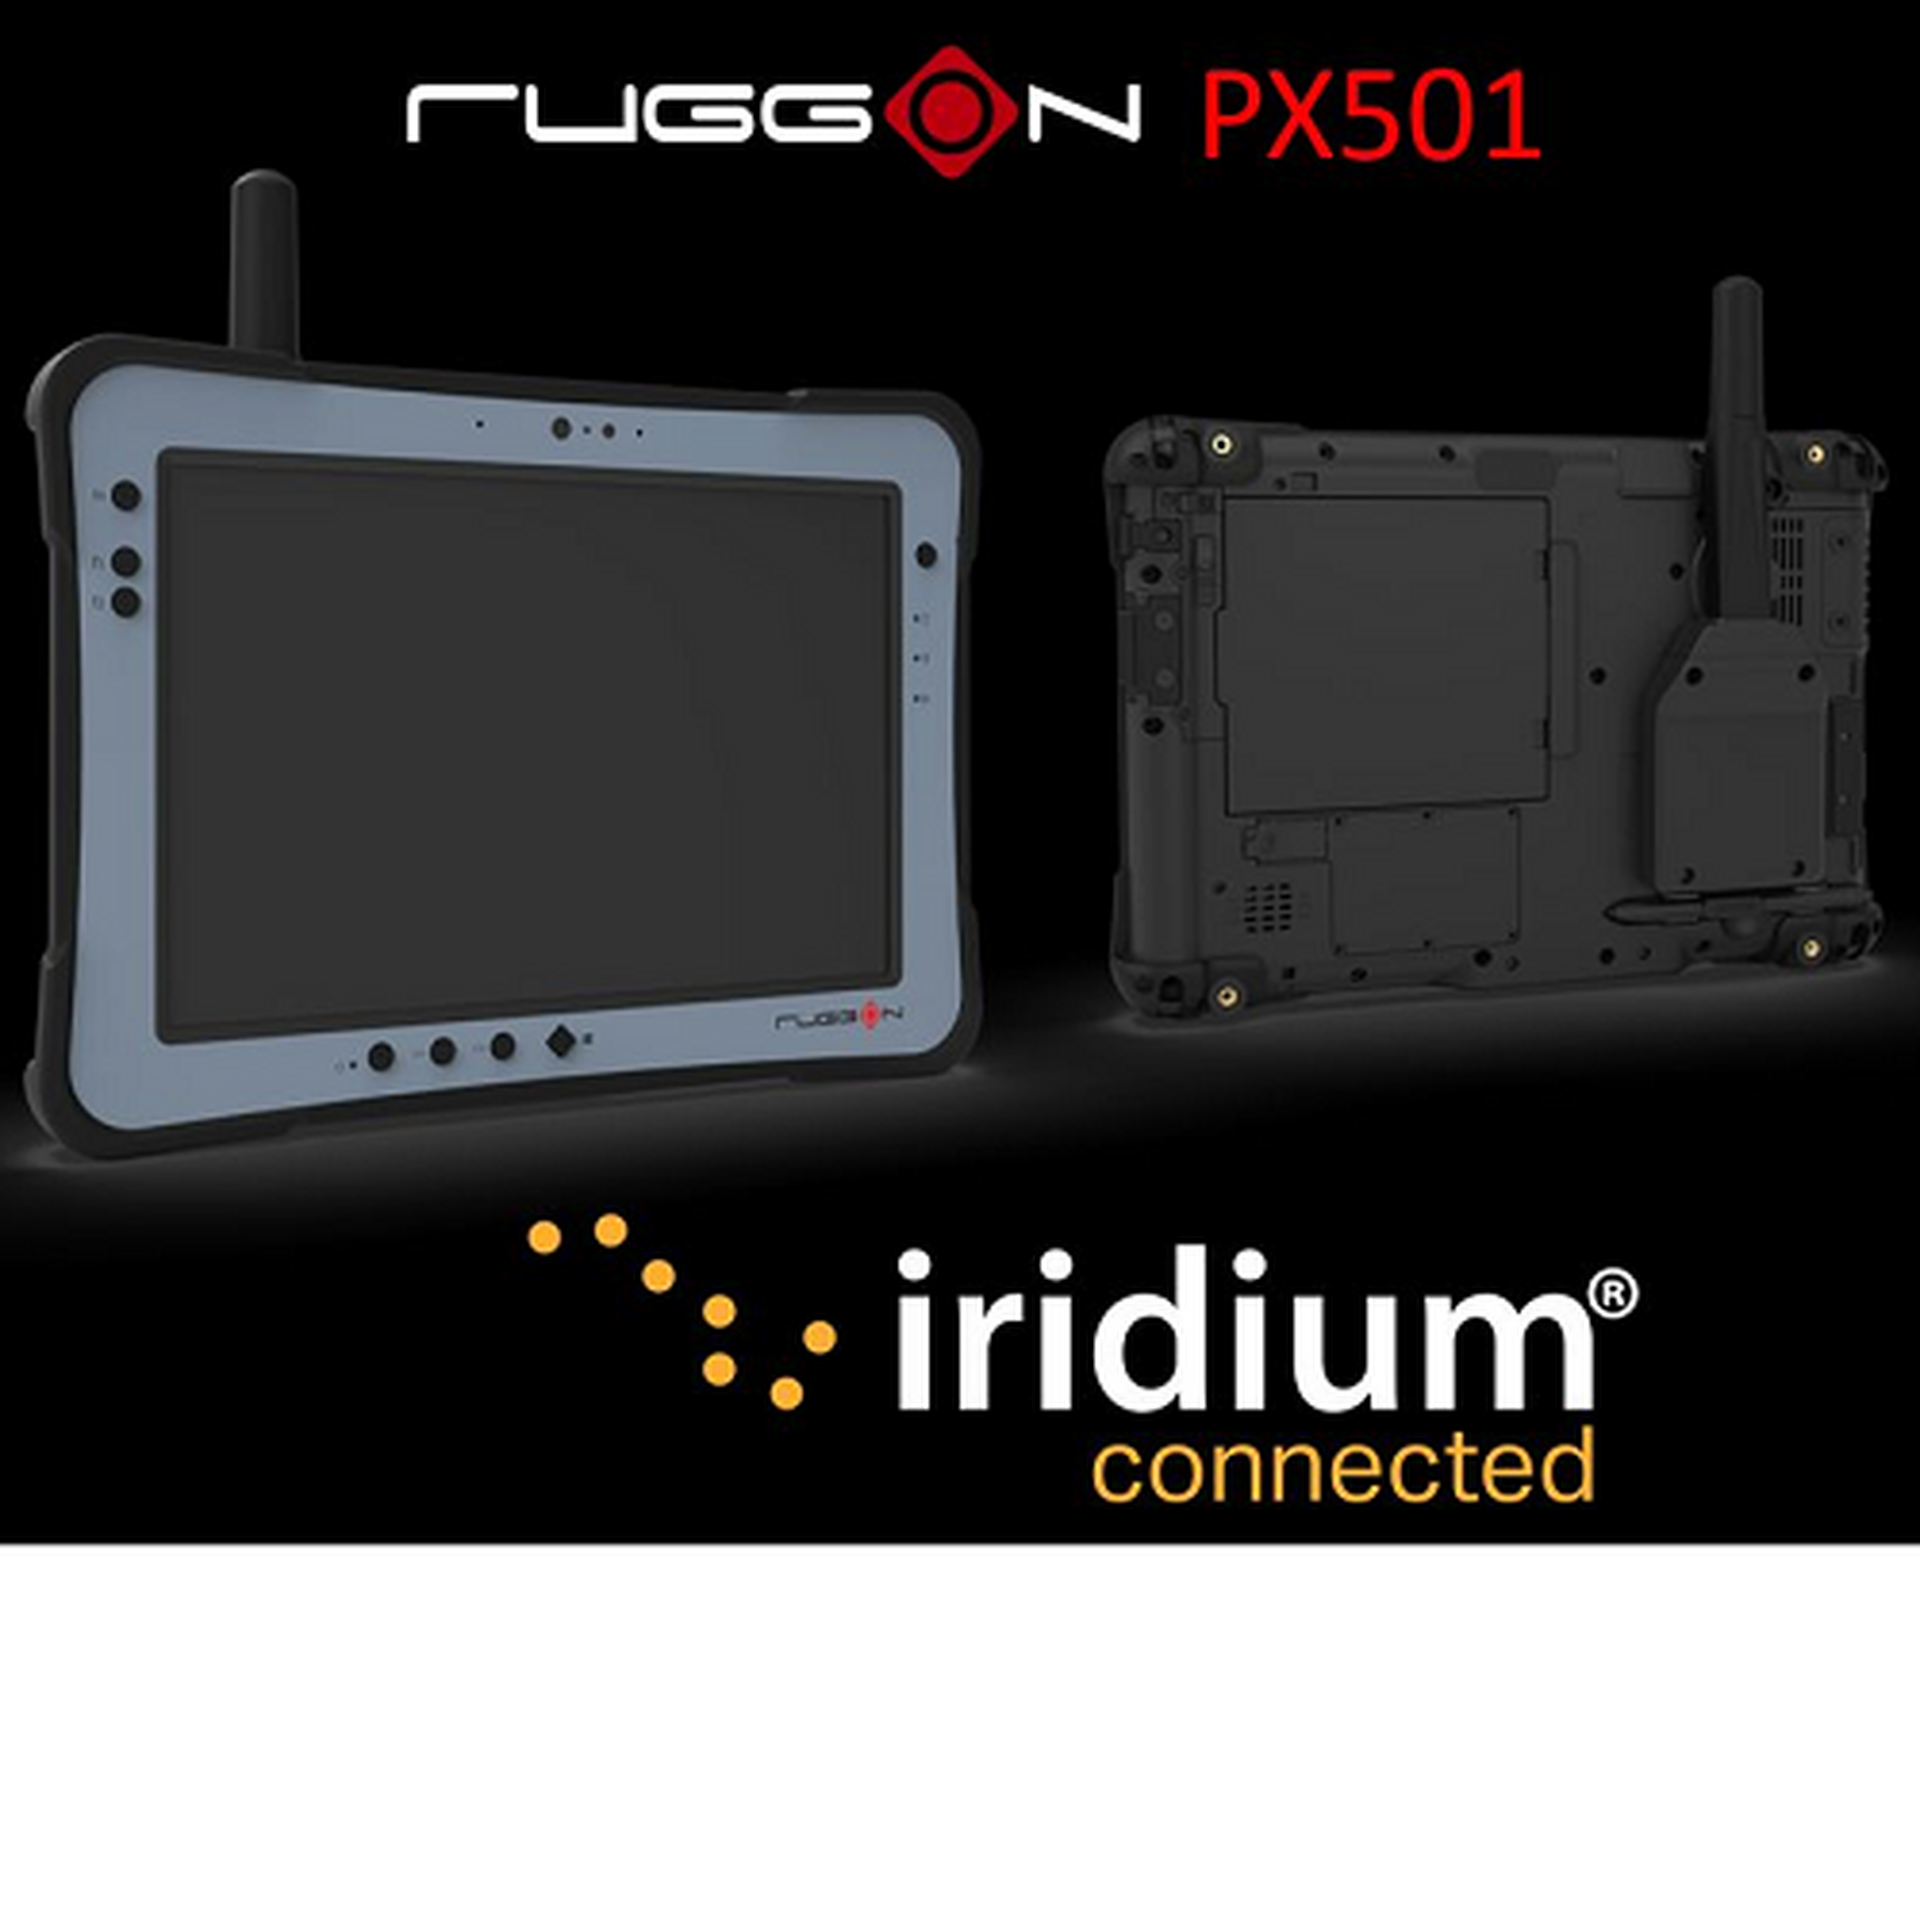 Ruggon PX501 G5